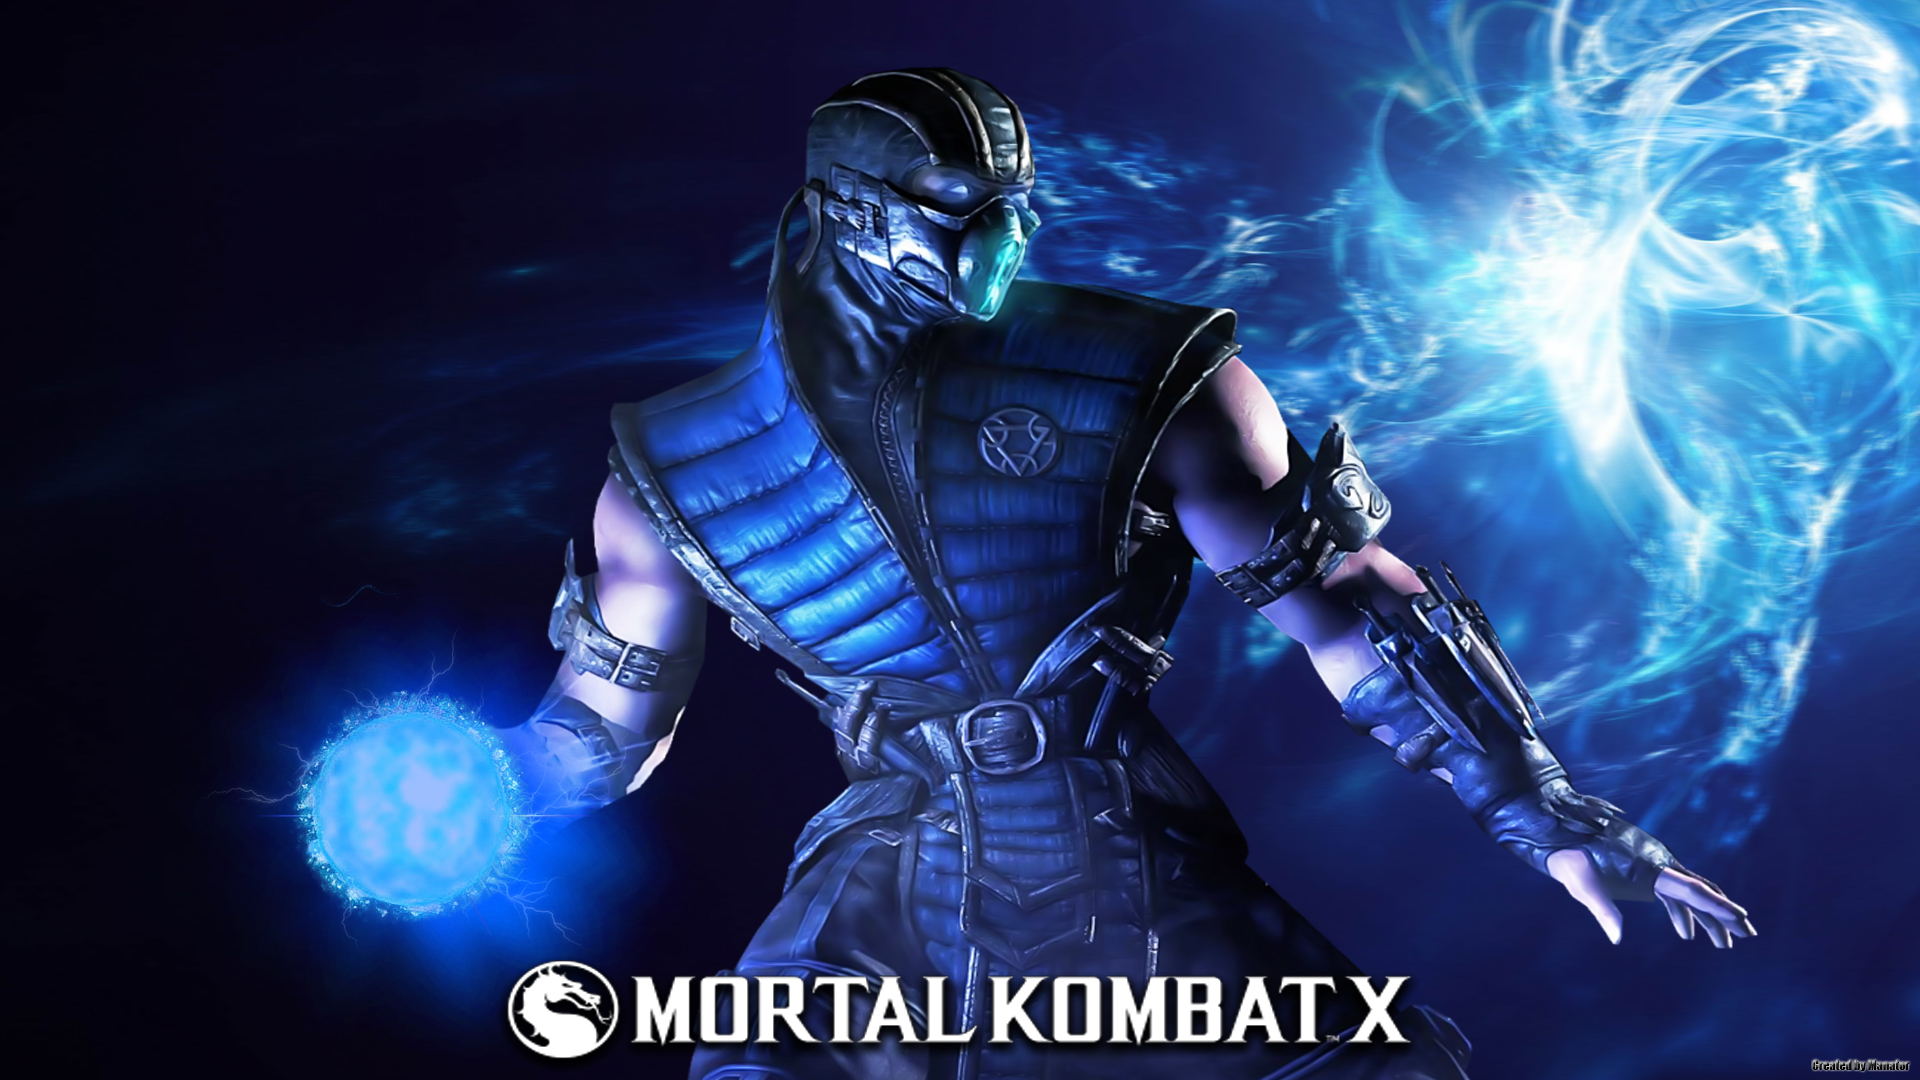 Бесплатная песня мортал комбат. Саб-Зиро Mortal Kombat 10. Саб Зиро мортал комбат 10. Саб-Зиро Mortal Kombat 1. Mortal Kombat 10 sub Zero.